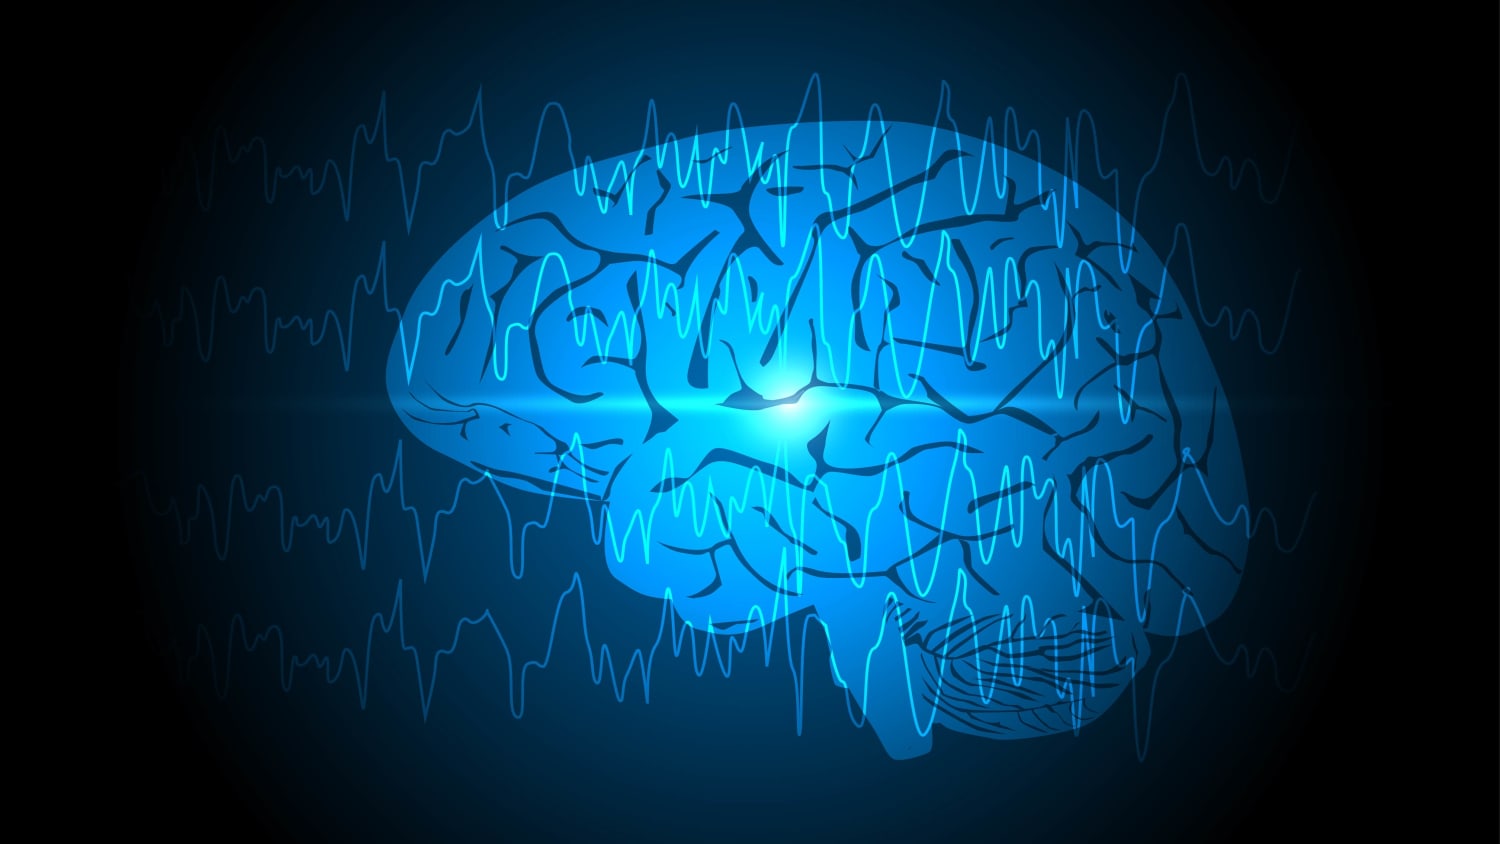 Abnormal brain waves or EEG arising from one region of brain, representing epilepsy or seizures